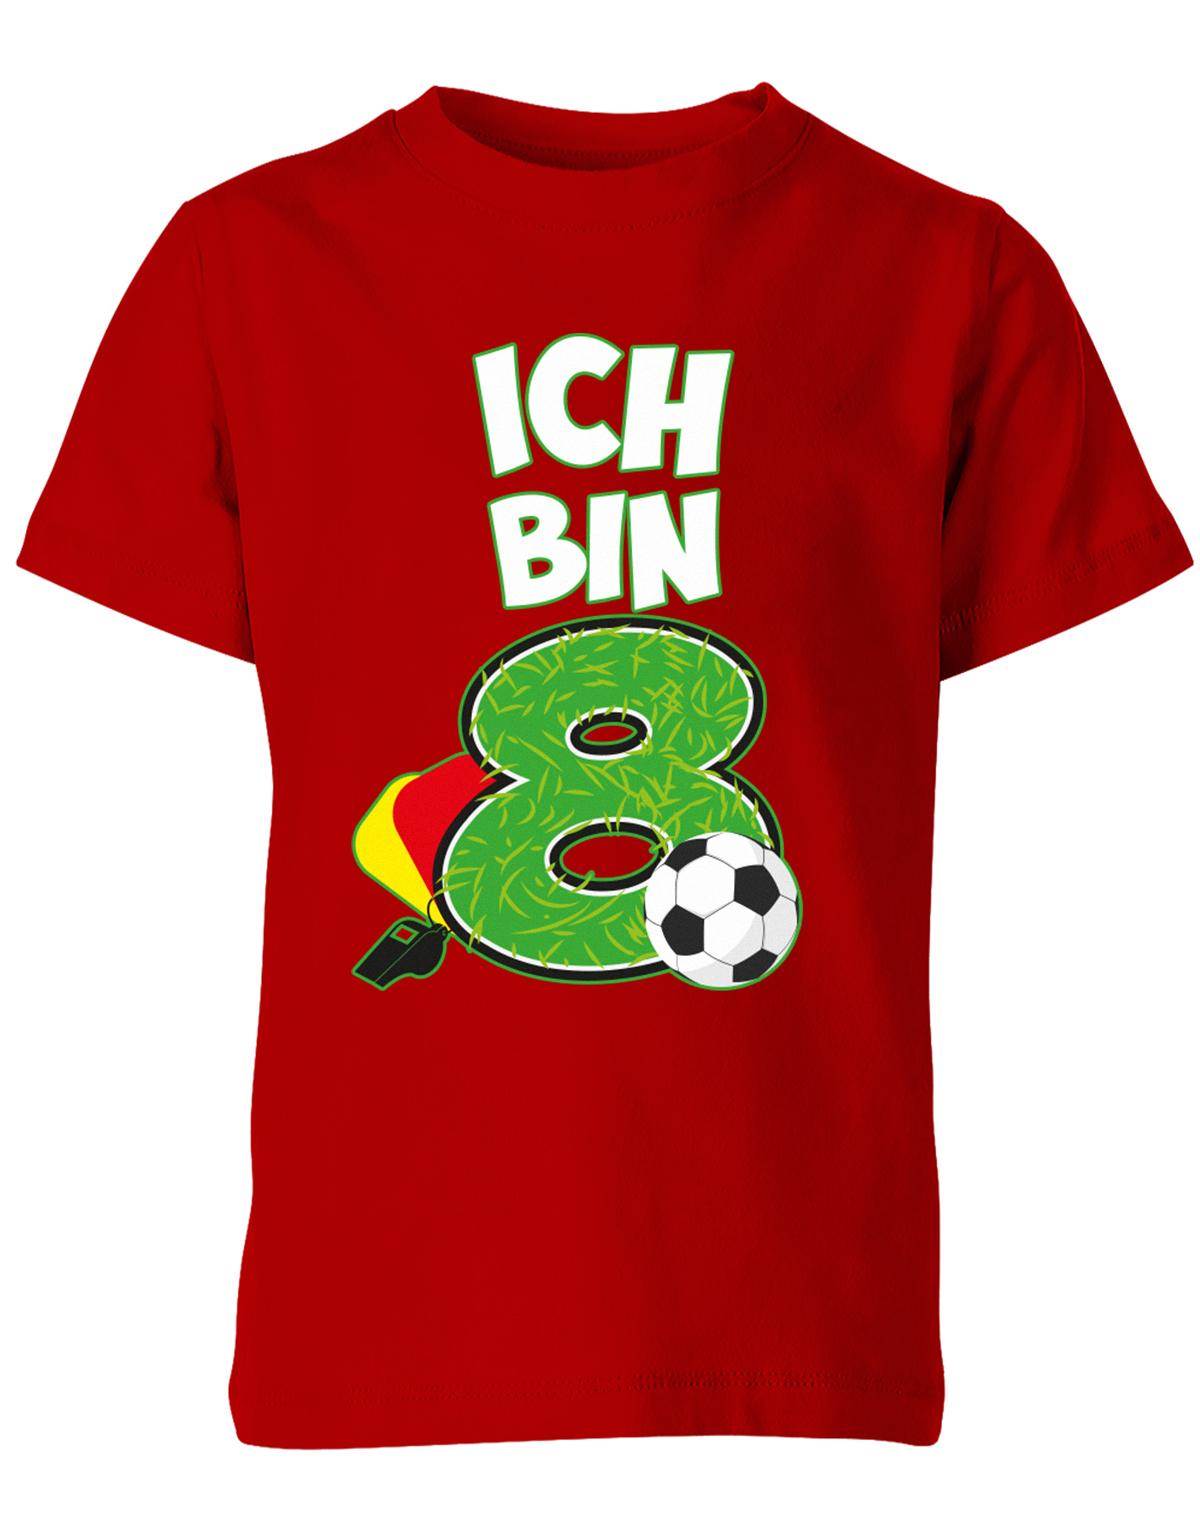 ich-bin-8-fussball-rote-gelbe-karte-geburtstag-fussballer-shirt-kinder-shirt-rotfpV59myz8SixF